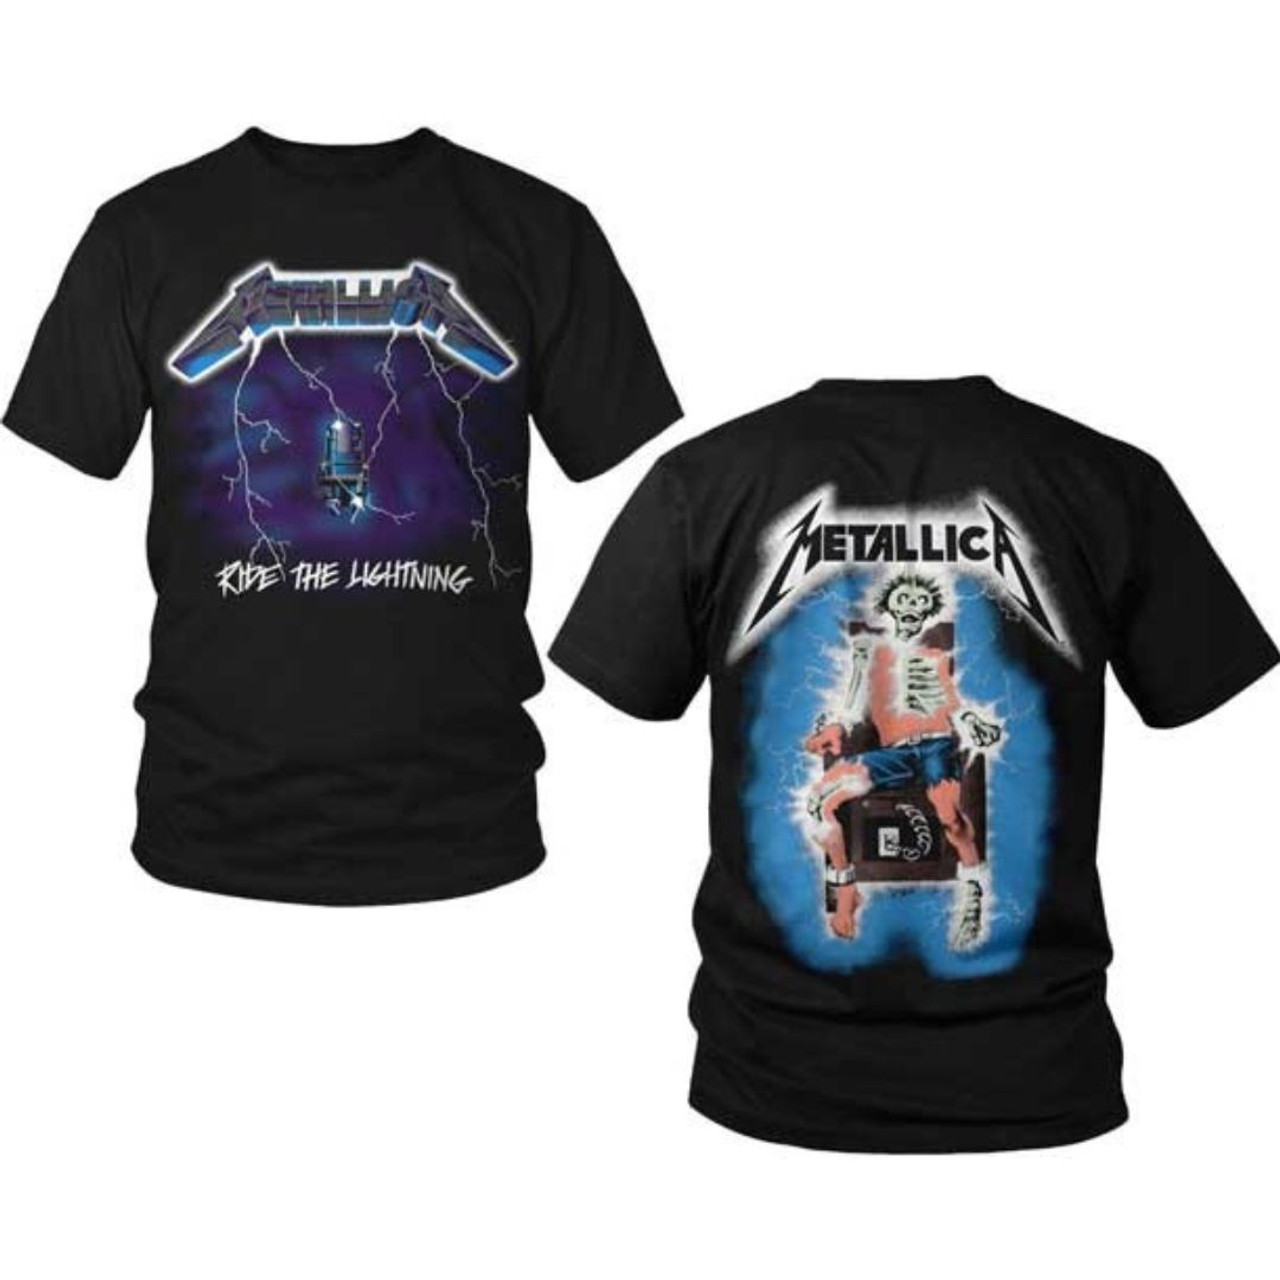 Metallica Ride the Lightning Album Cover & Electrocuted Man T-shirt